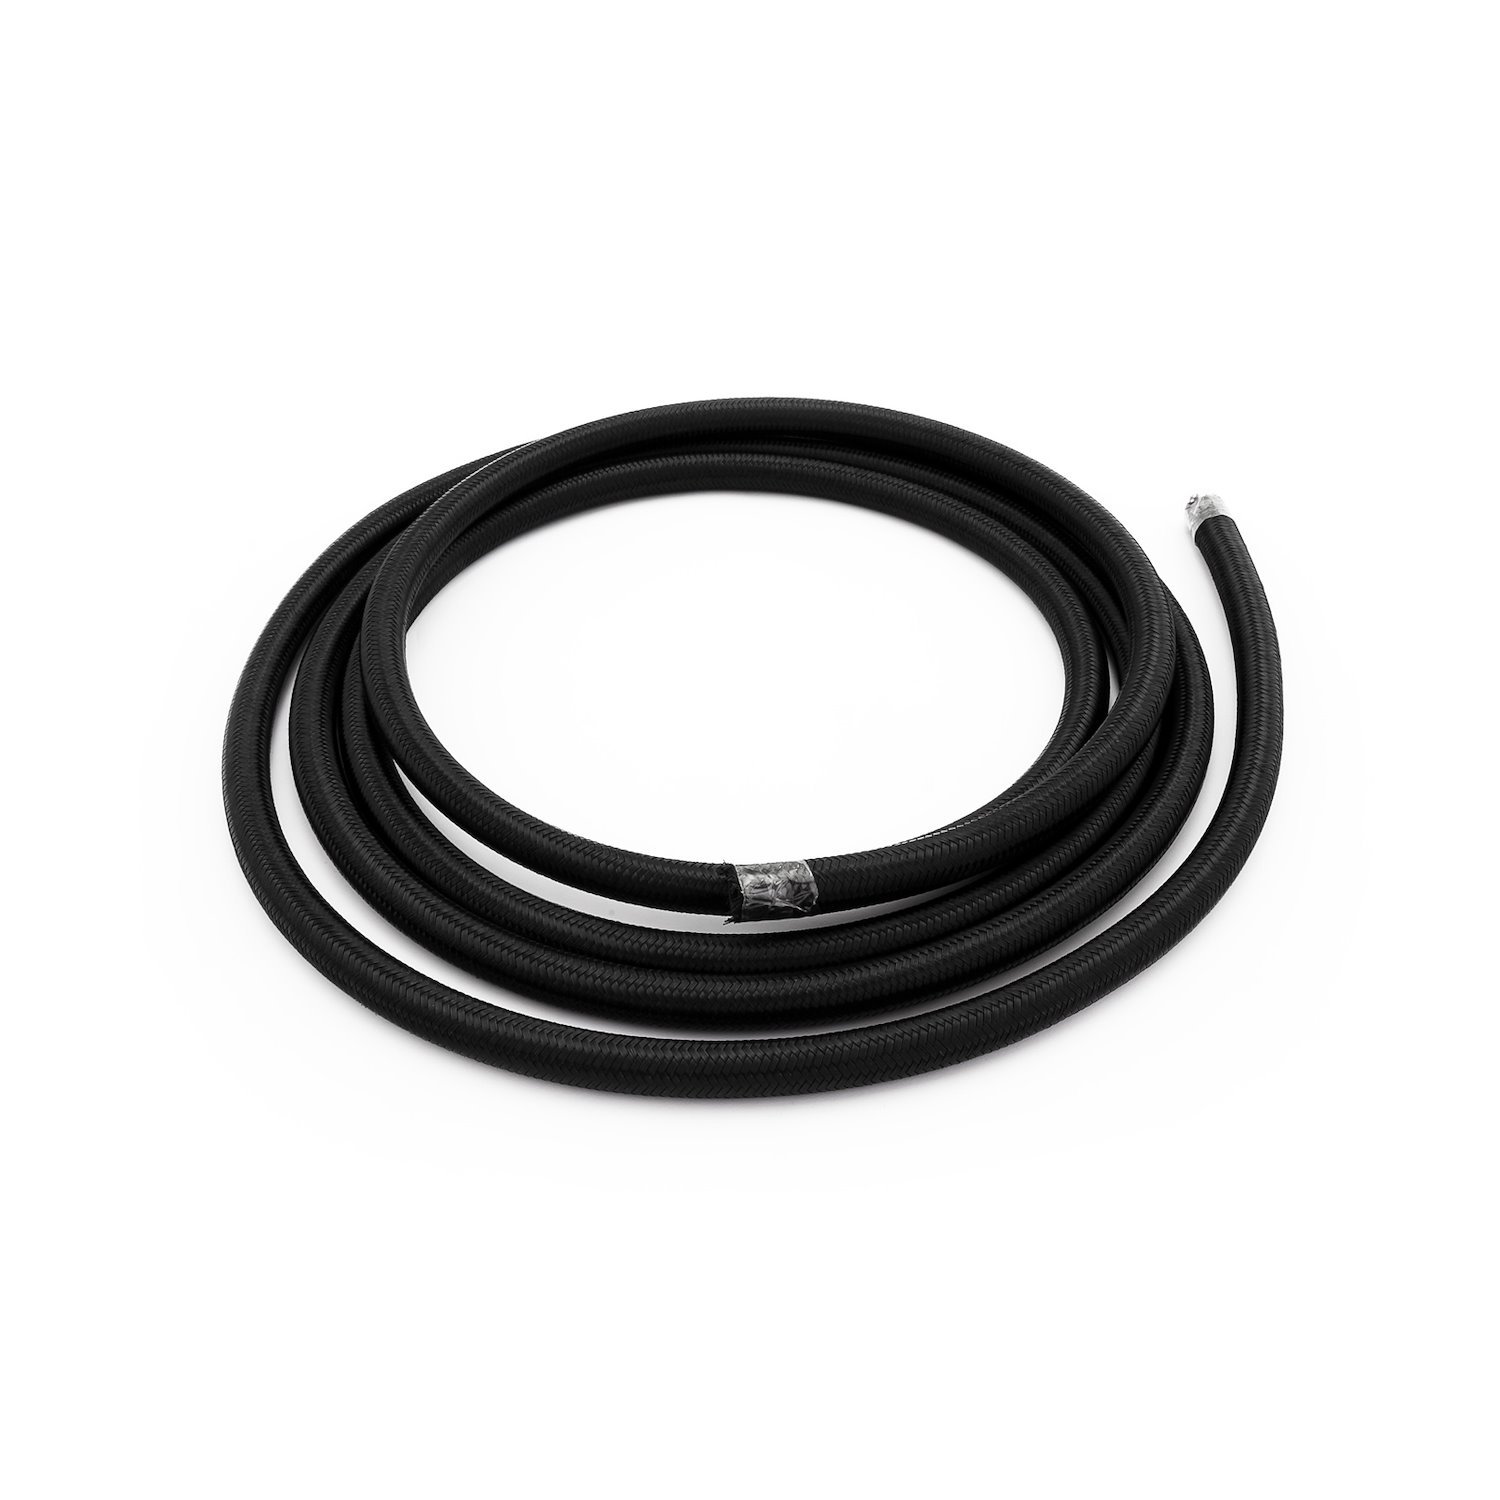 PCE339.1020 -8 AN 7/16 in. Black Nylon Fuel Oil Braided Hose Line - 4m / 13ft